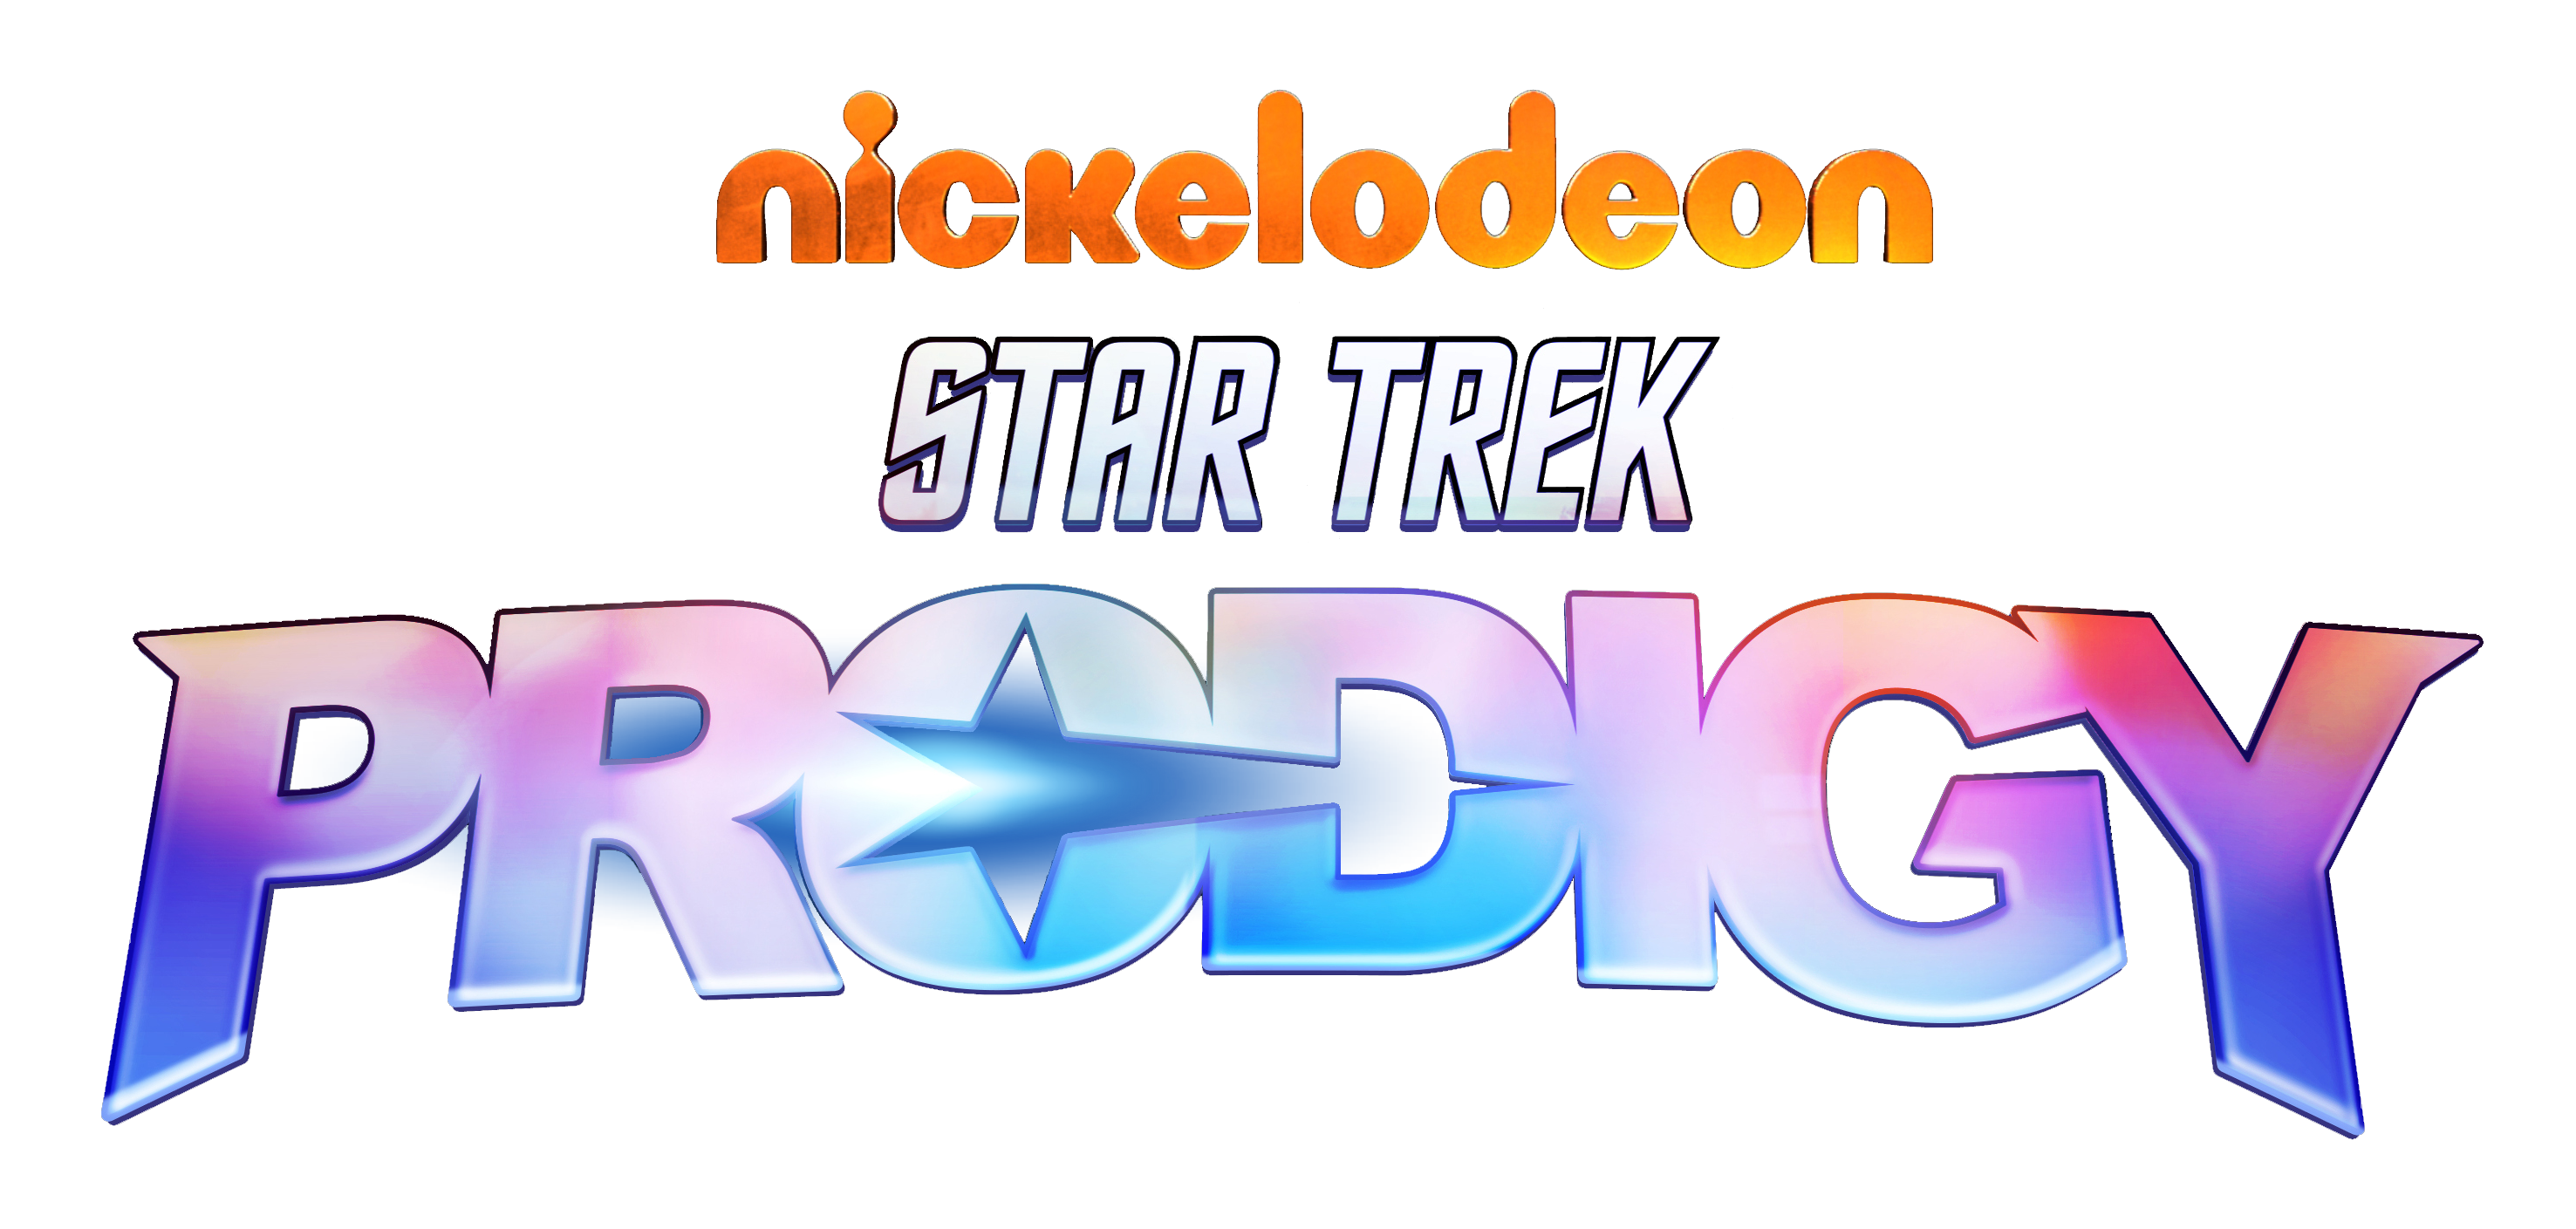 Nickelodeon Star Trek: Prodigy HD logo wallpaper for desktop background.